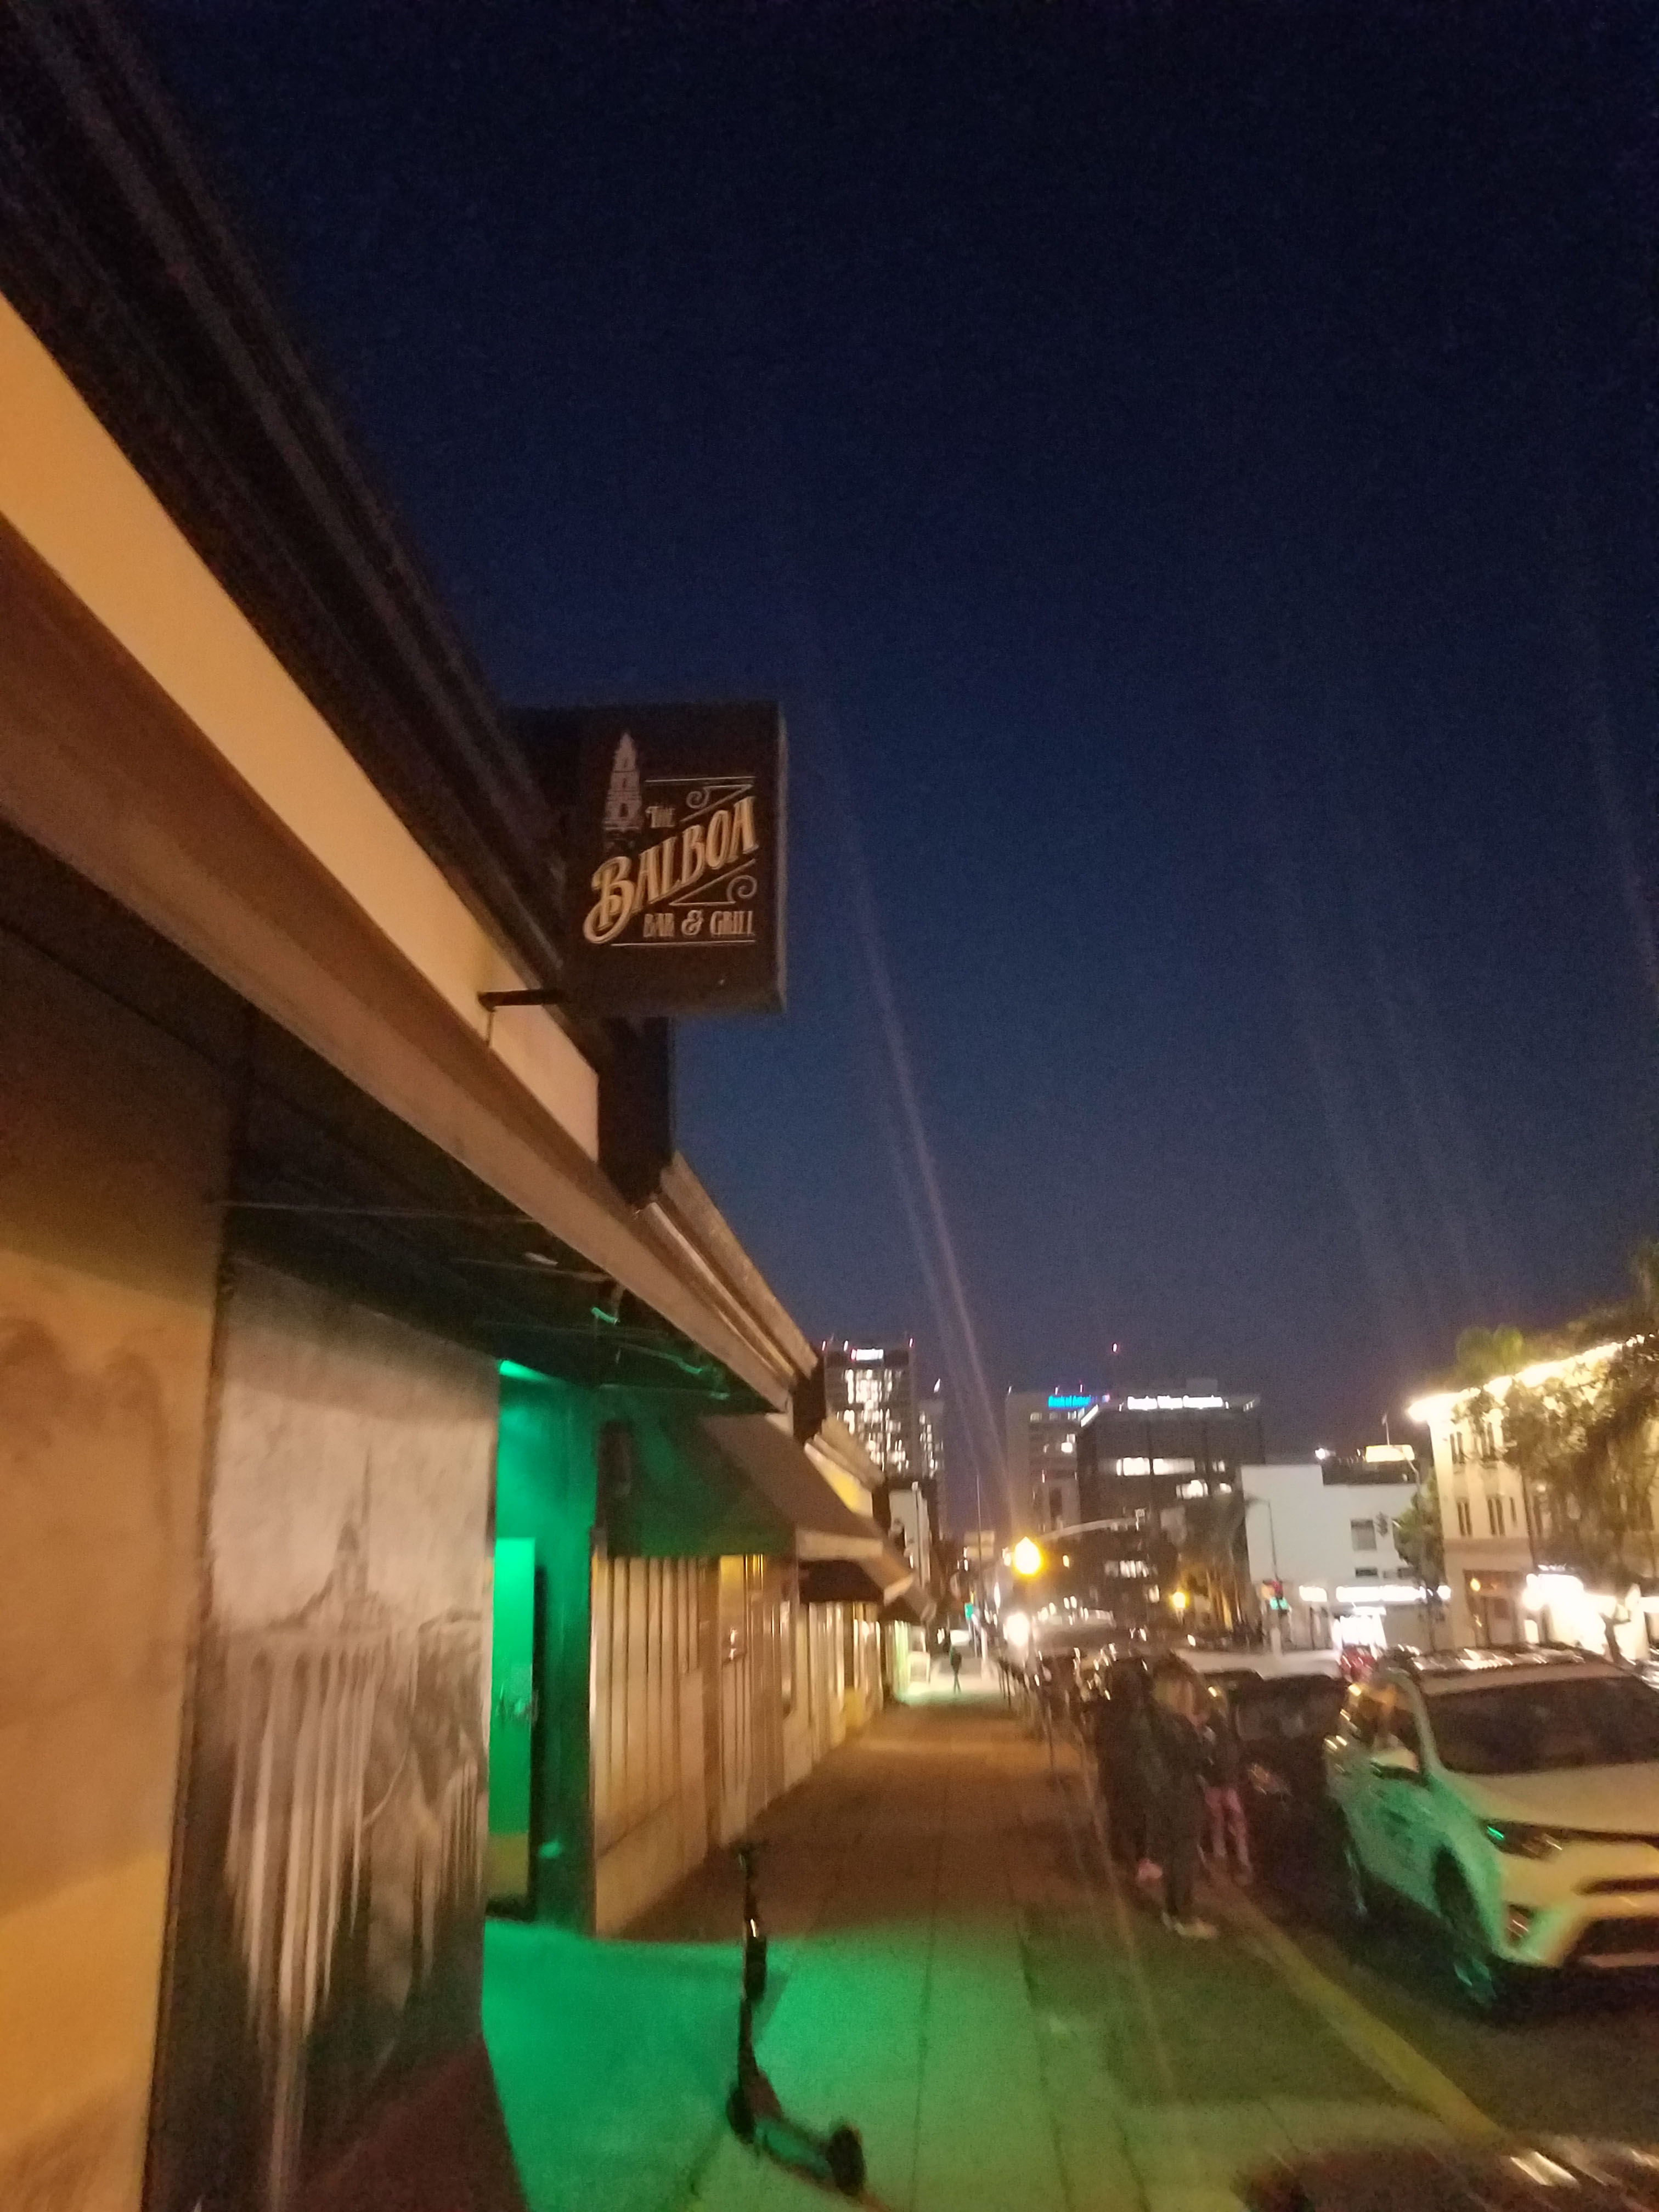 Balboa Bar and Grill